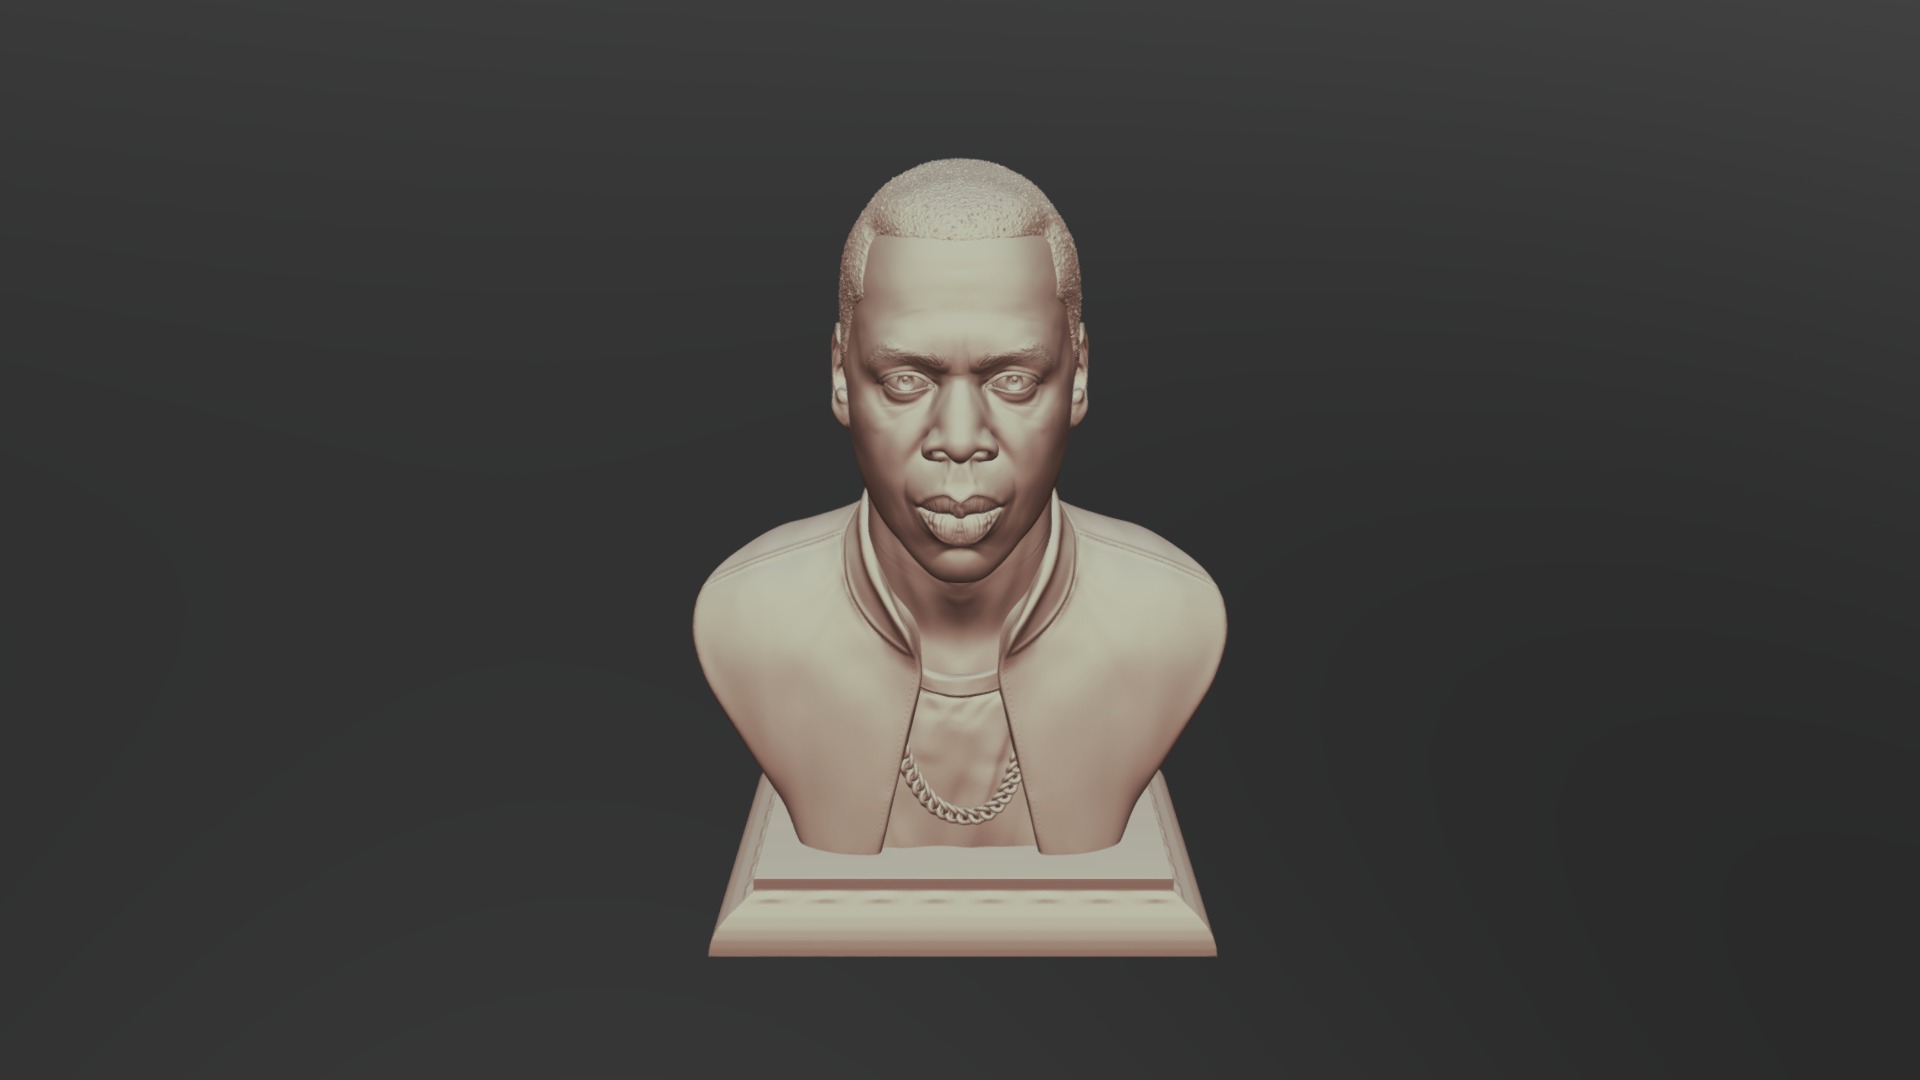 3D model Jay Z Portrait sculpture ready to 3D print - This is a 3D model of the Jay Z Portrait sculpture ready to 3D print. The 3D model is about a statue of a person.